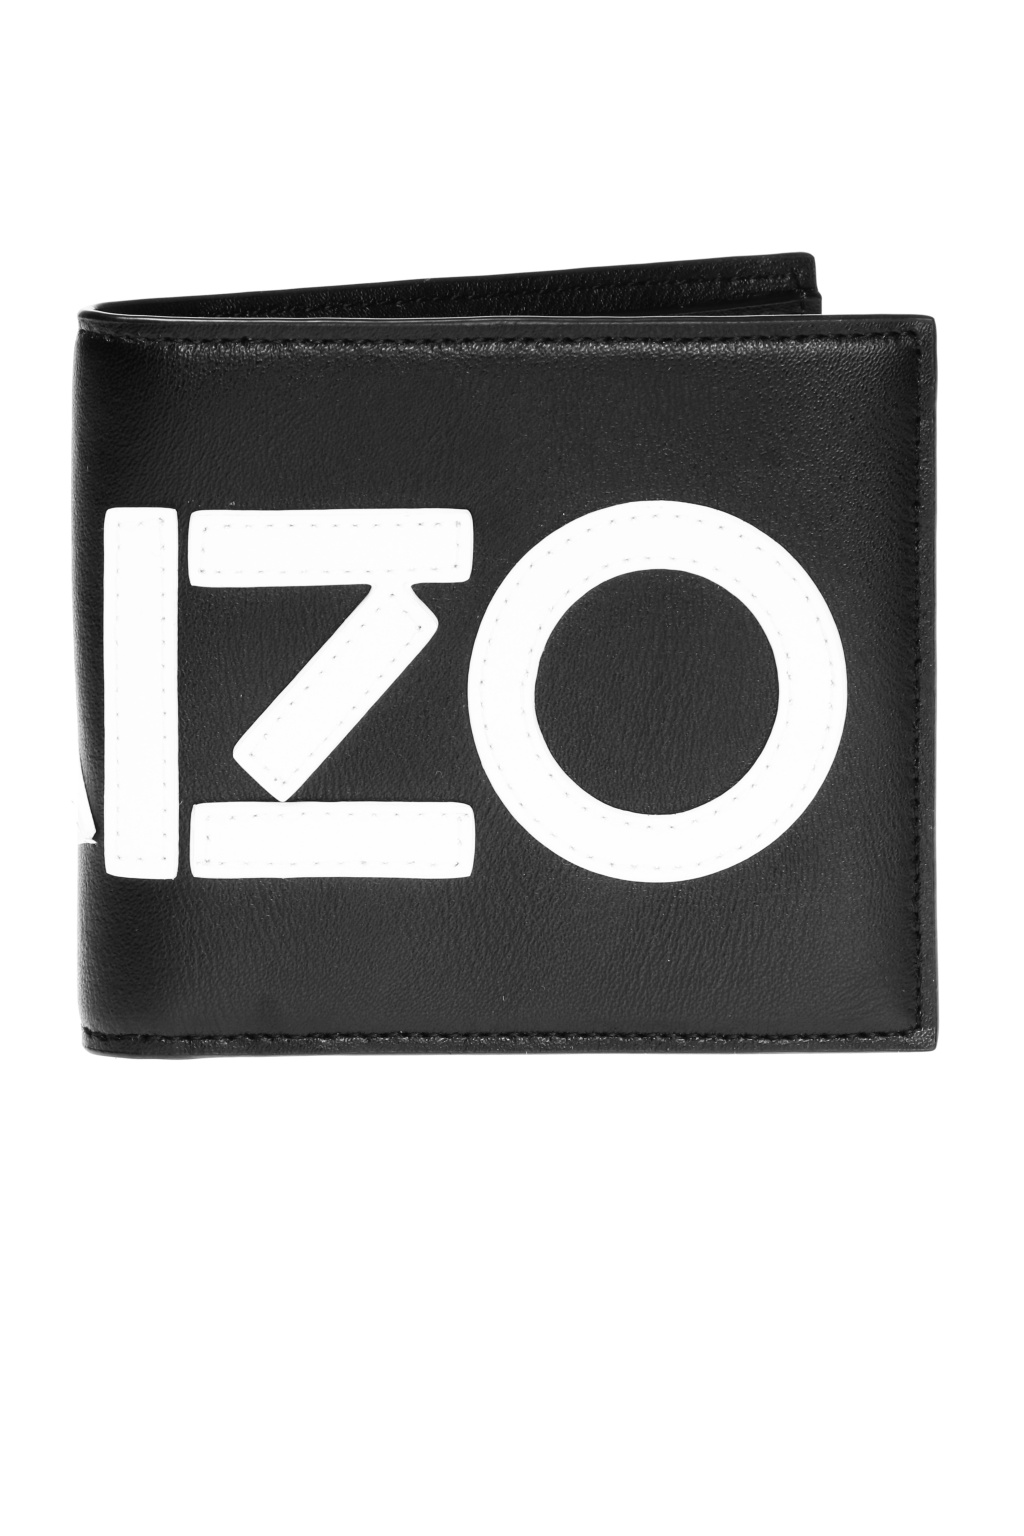 kenzo logo wallet